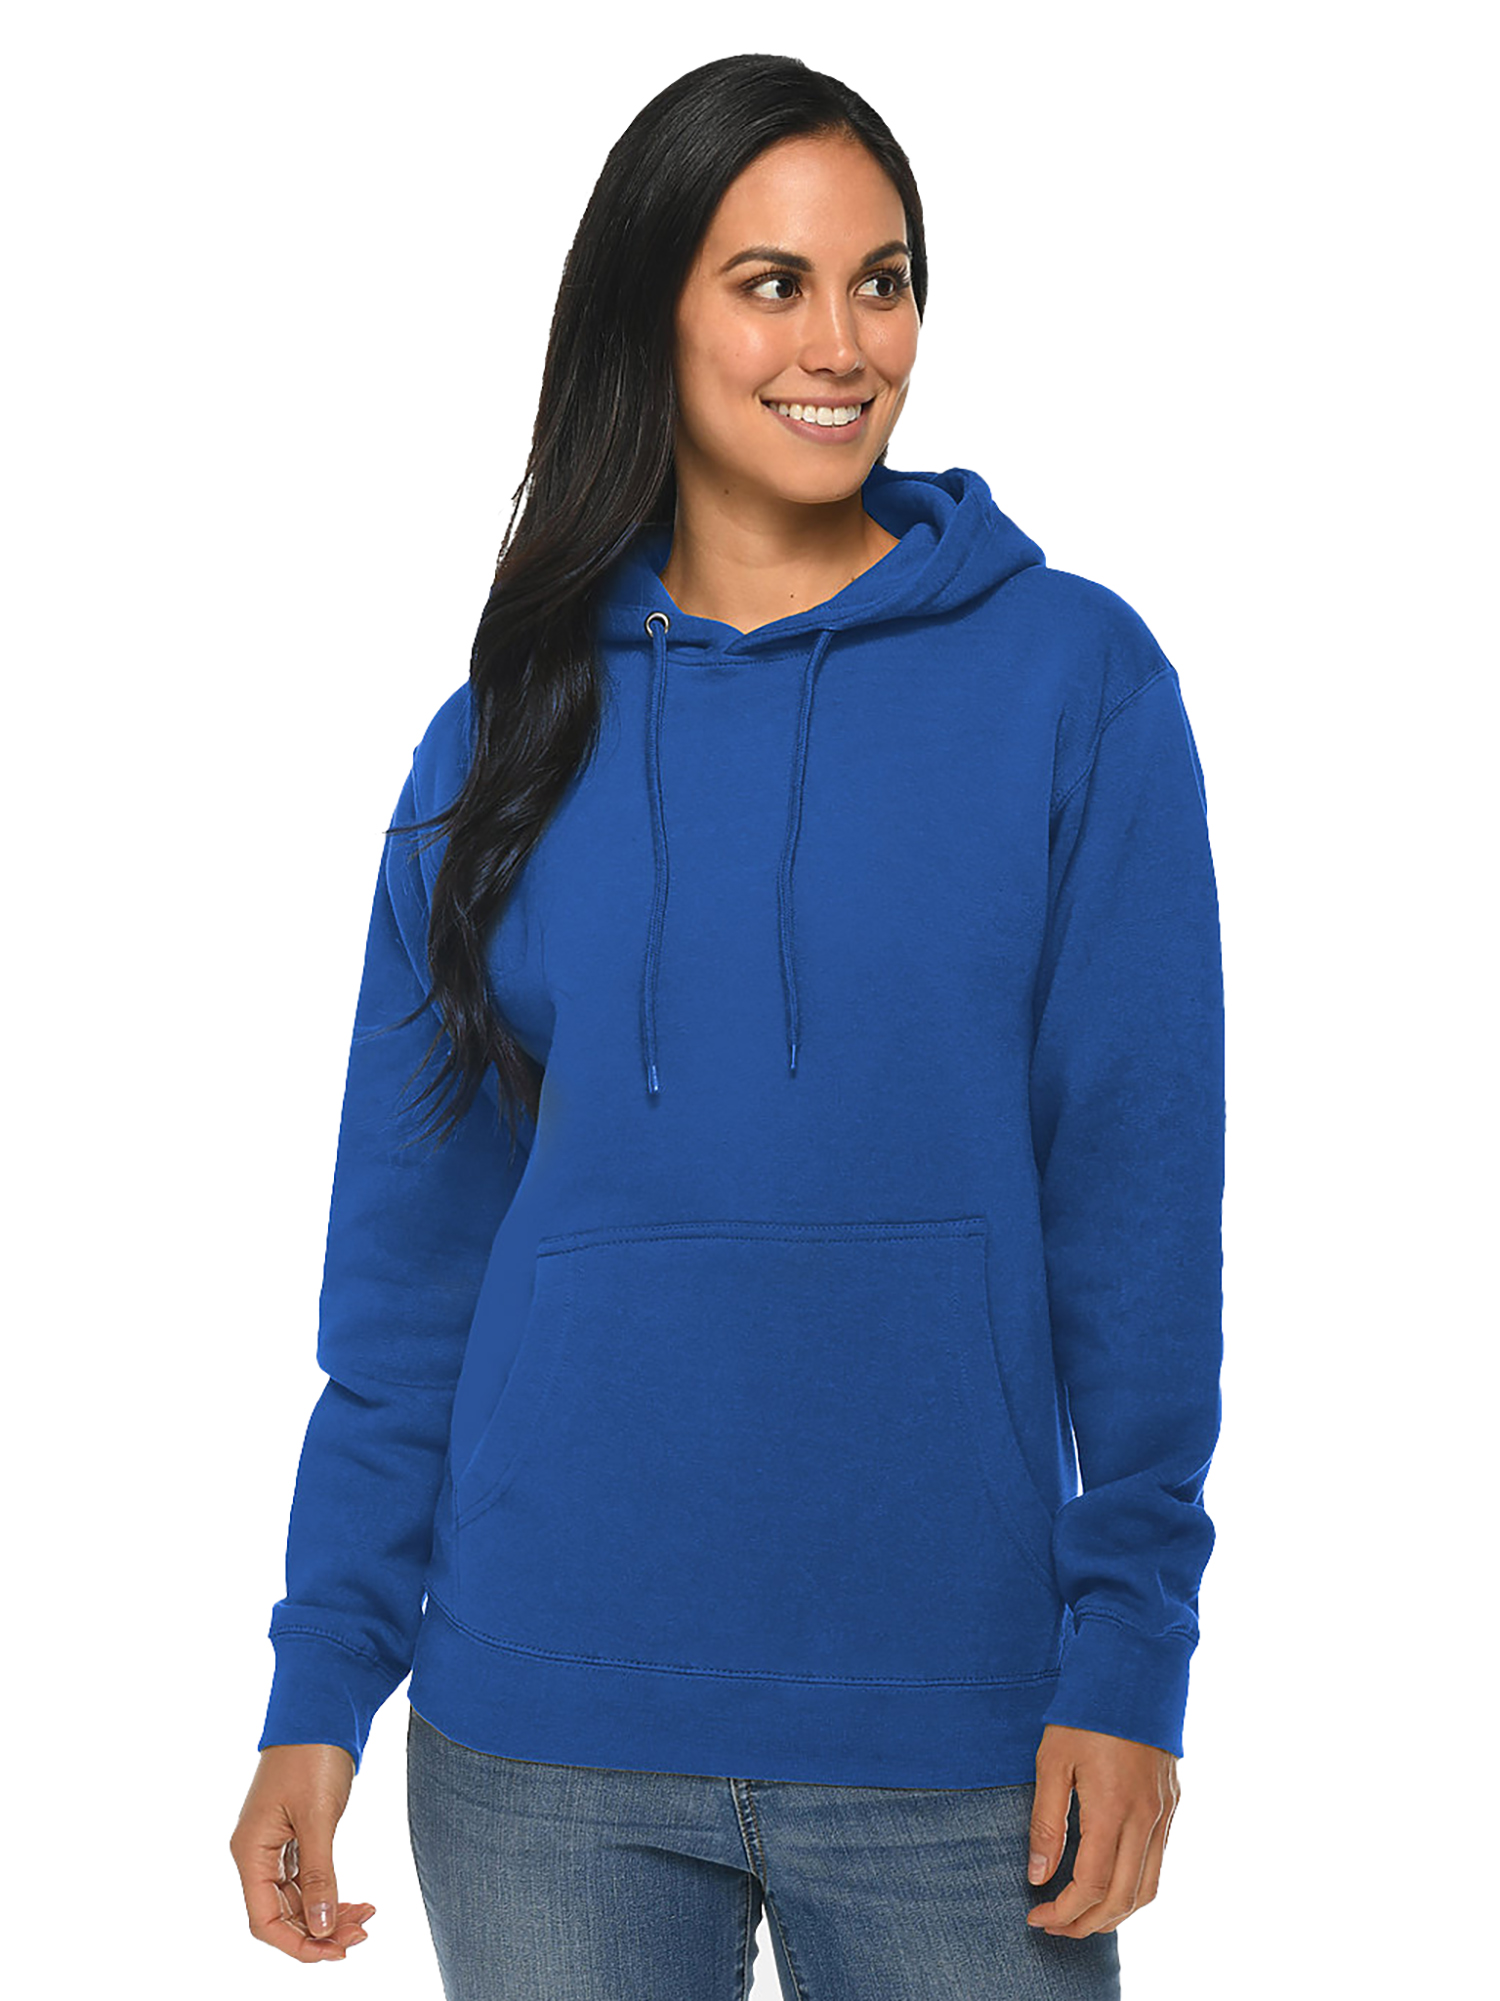 Unisex Pullover Hoodie for Women XS S M L XL 2XL 3XL Men Hoodie Casual  Plain Hoody for Men - Blue Hoodie Blue Sweatshirt